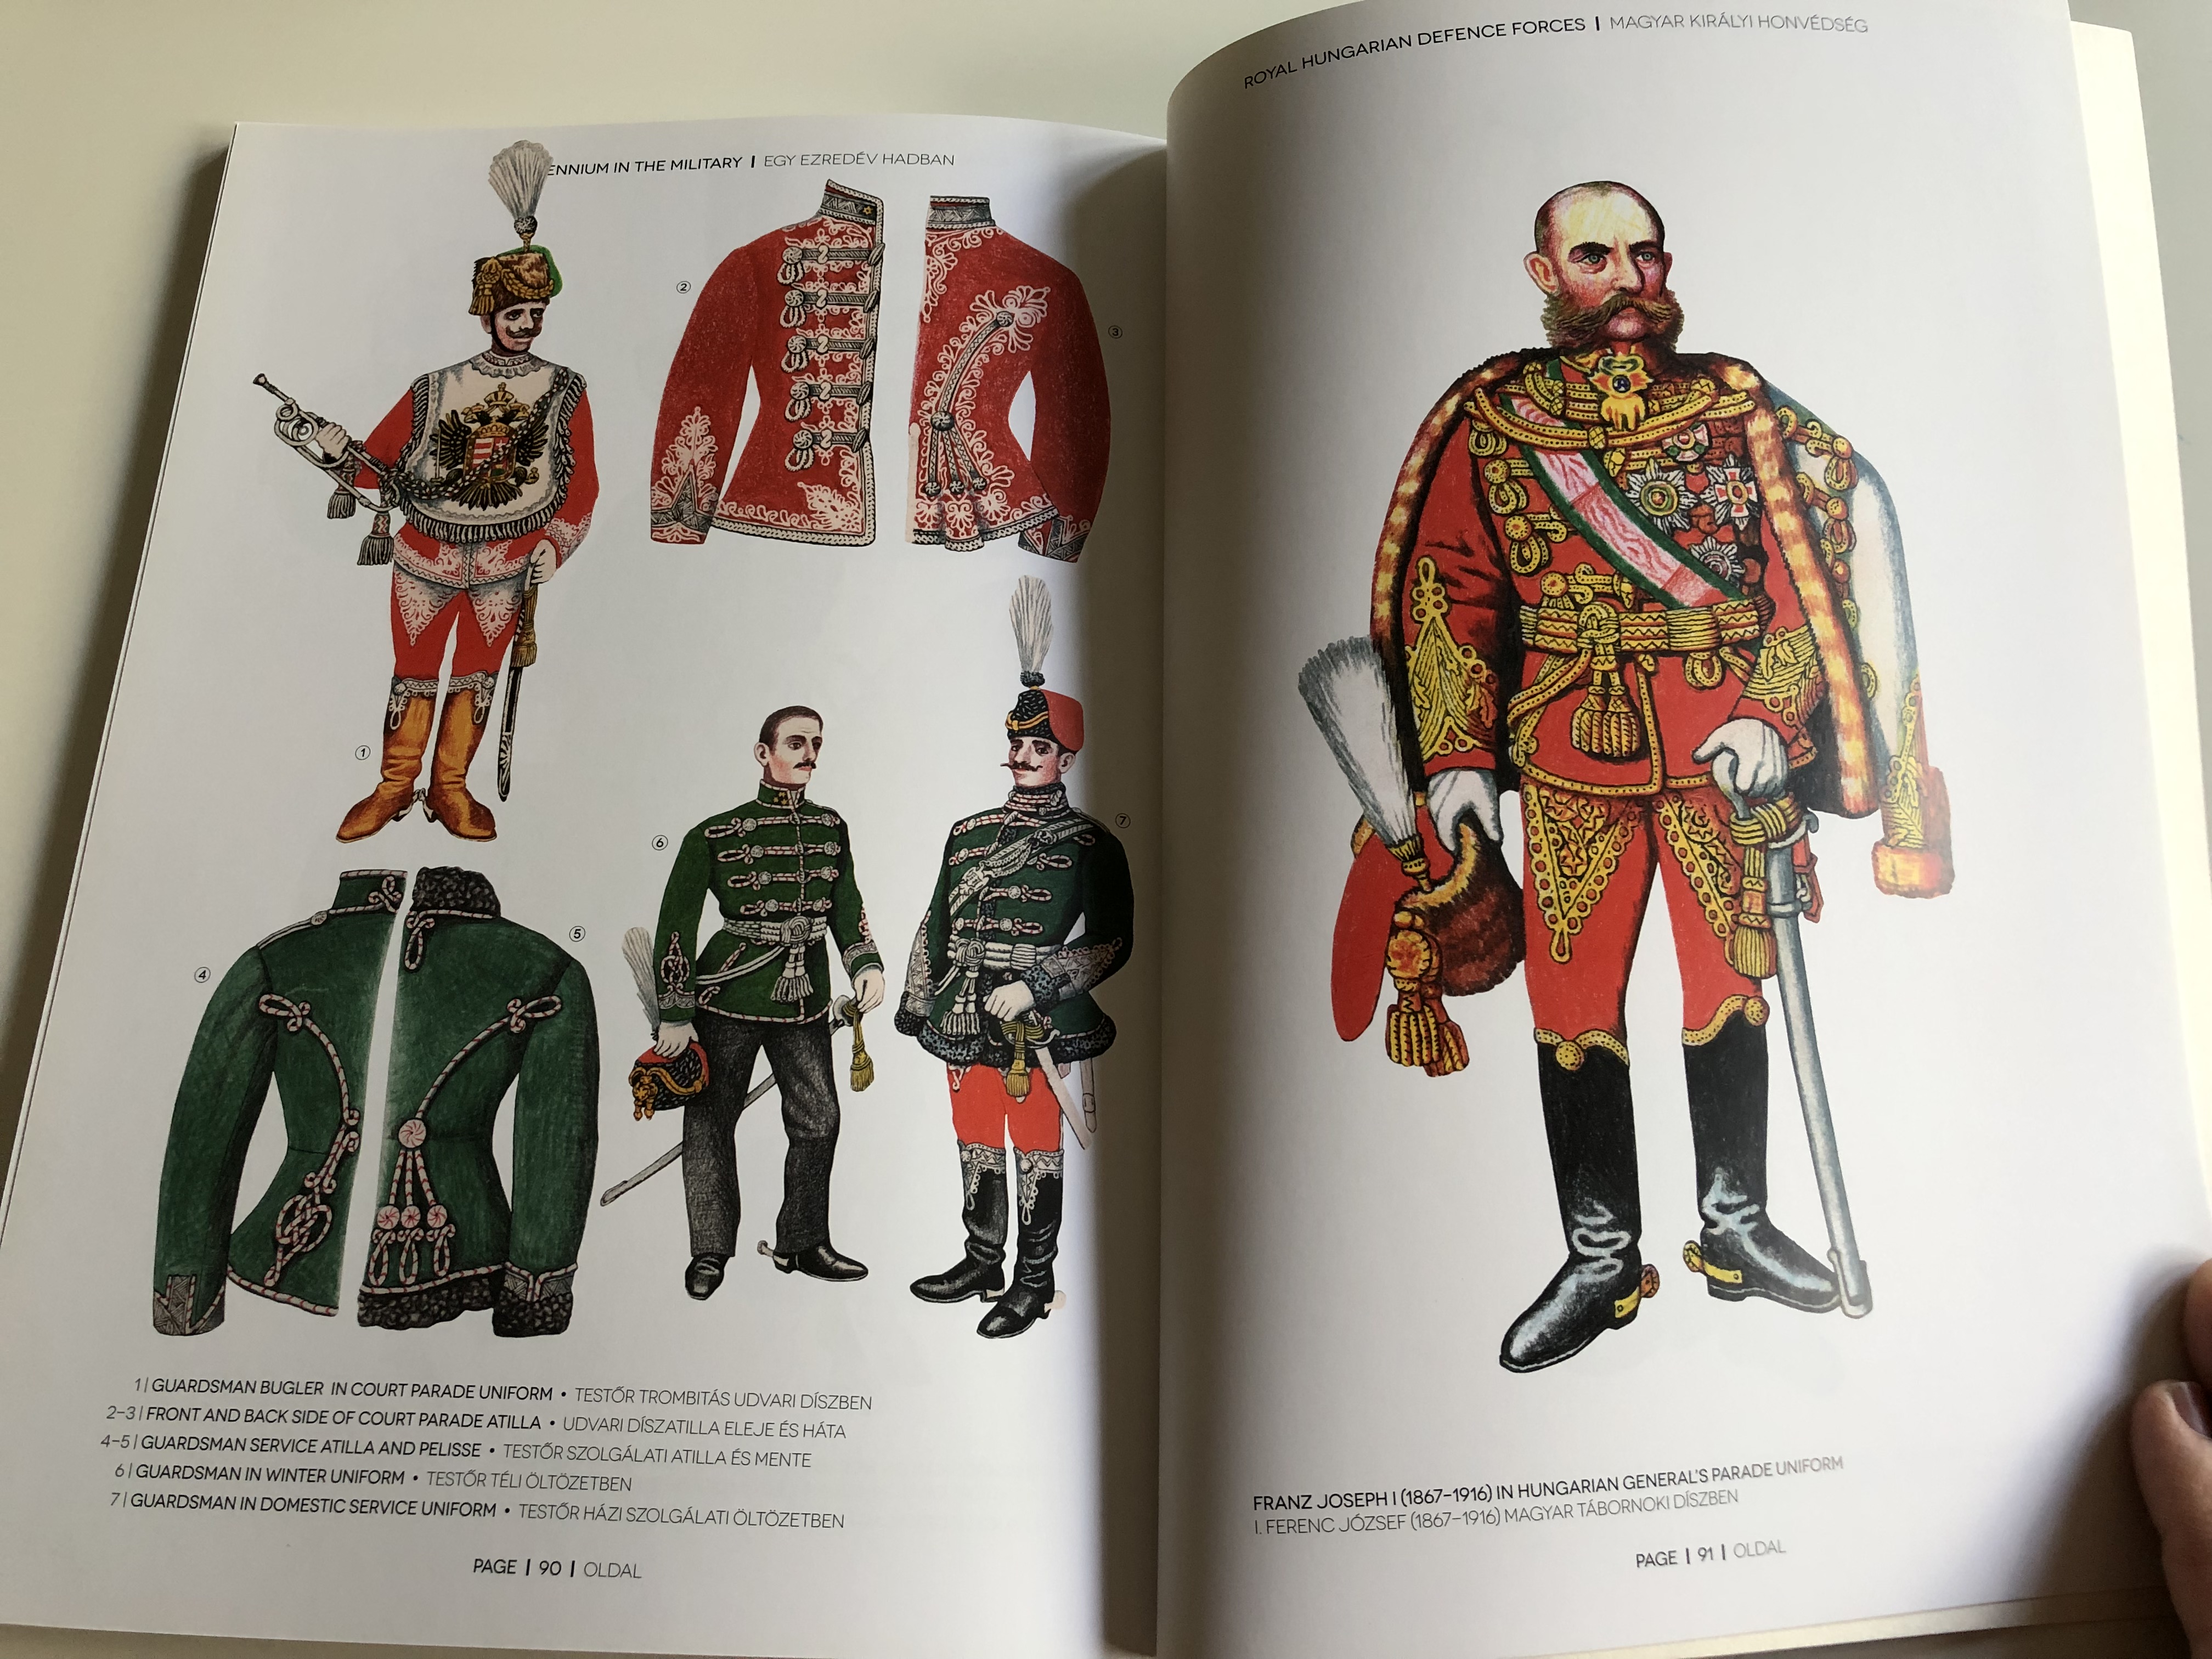 royal-hungarian-defence-forces-1868-1914-by-gy-z-somogyi-magyar-kir-lyi-honv-ds-g-1868-1914-a-millenium-in-the-military-egy-ezred-v-hadban-paperback-2014-hm-zr-nyi-9-.jpg